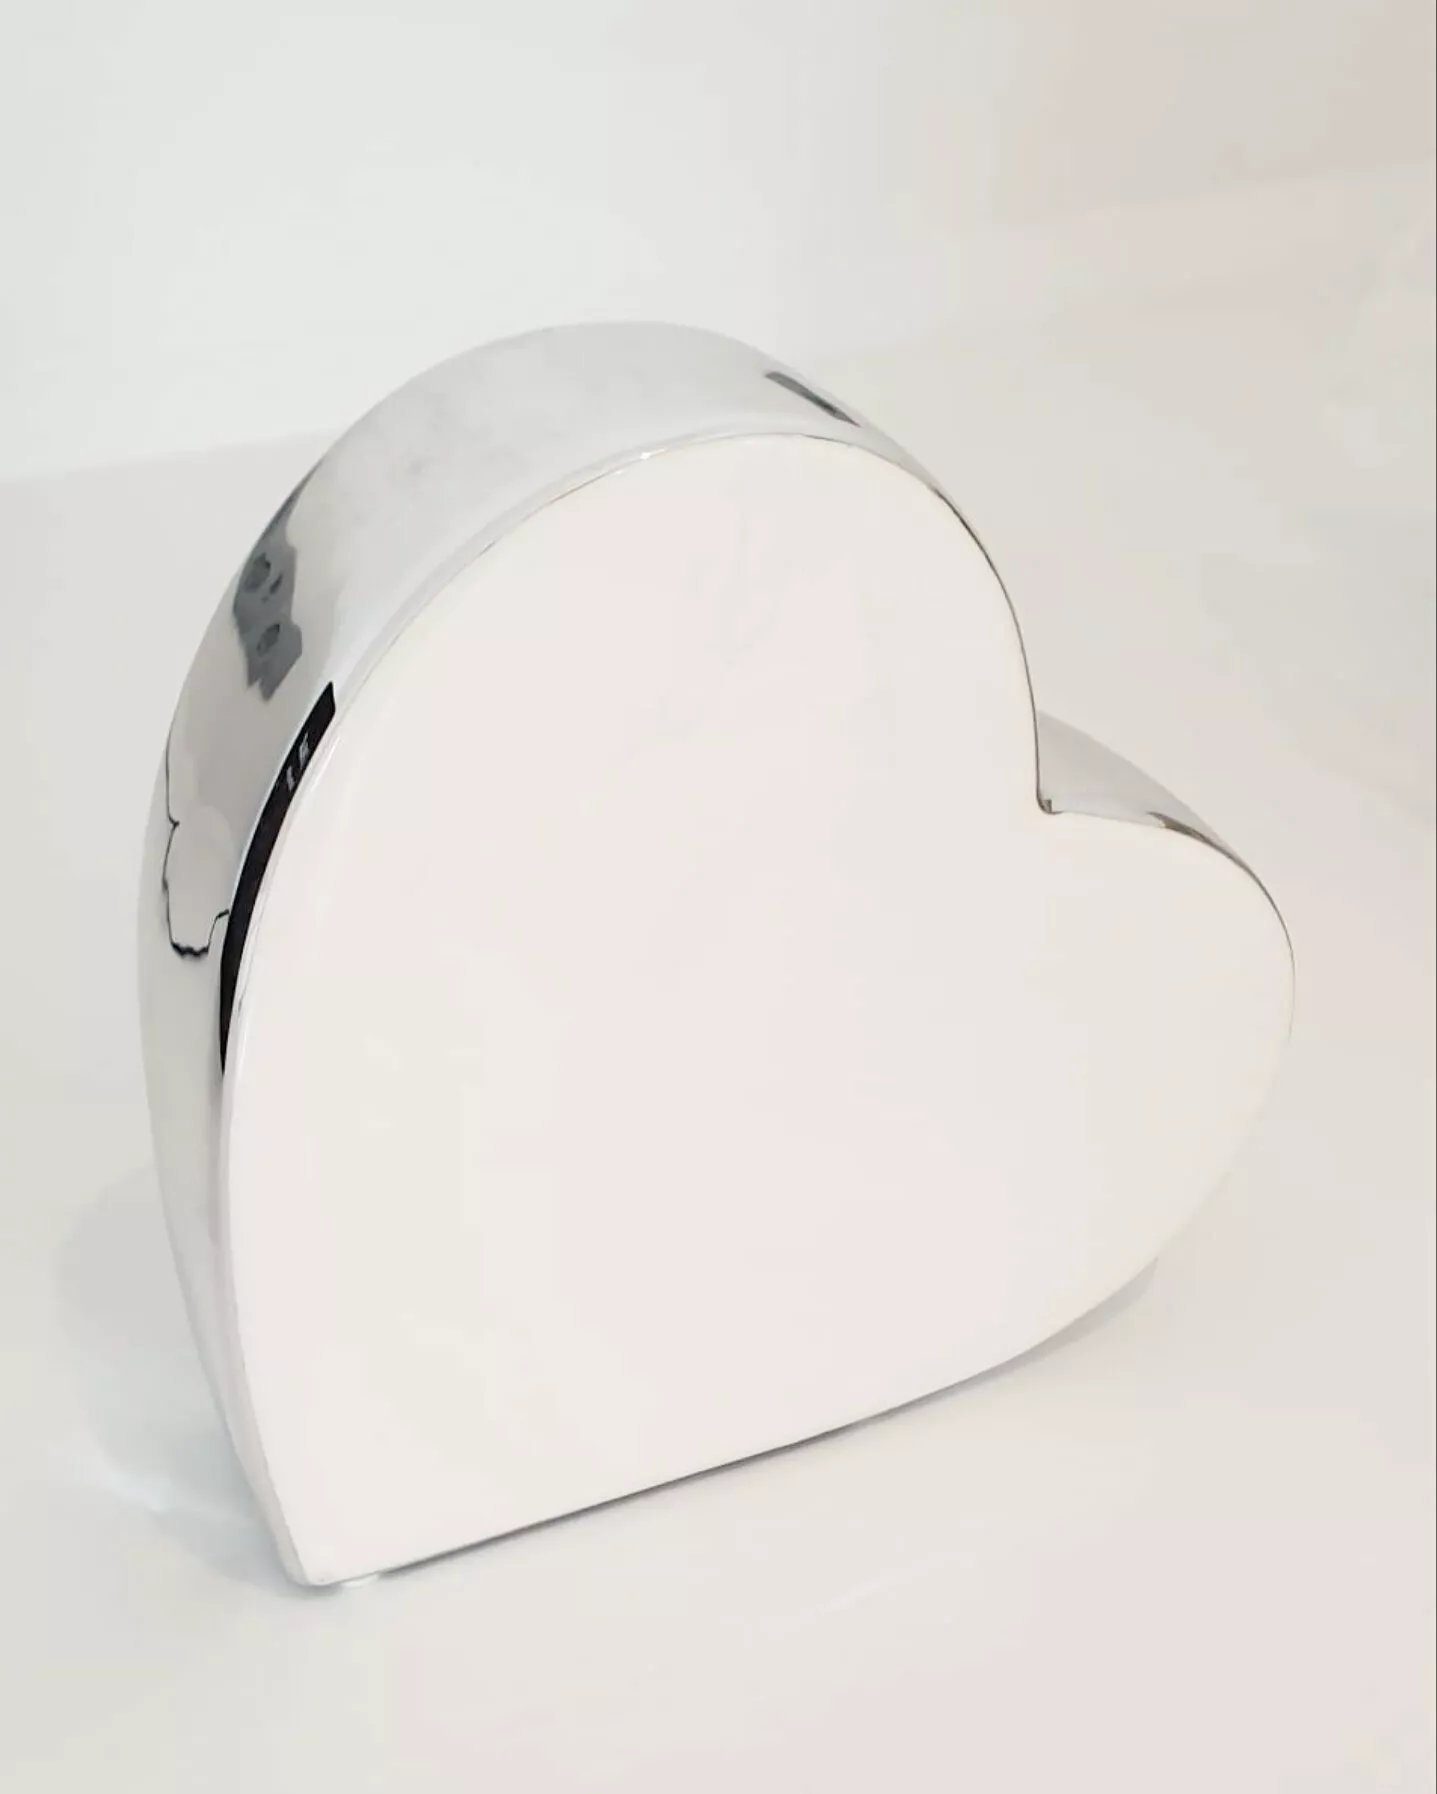 Home,Relax&Style Dekoobjekt Design Deko Herz aus Porzellan weiß silber/chrome, 18cm x 17cm x 5cm, Herz